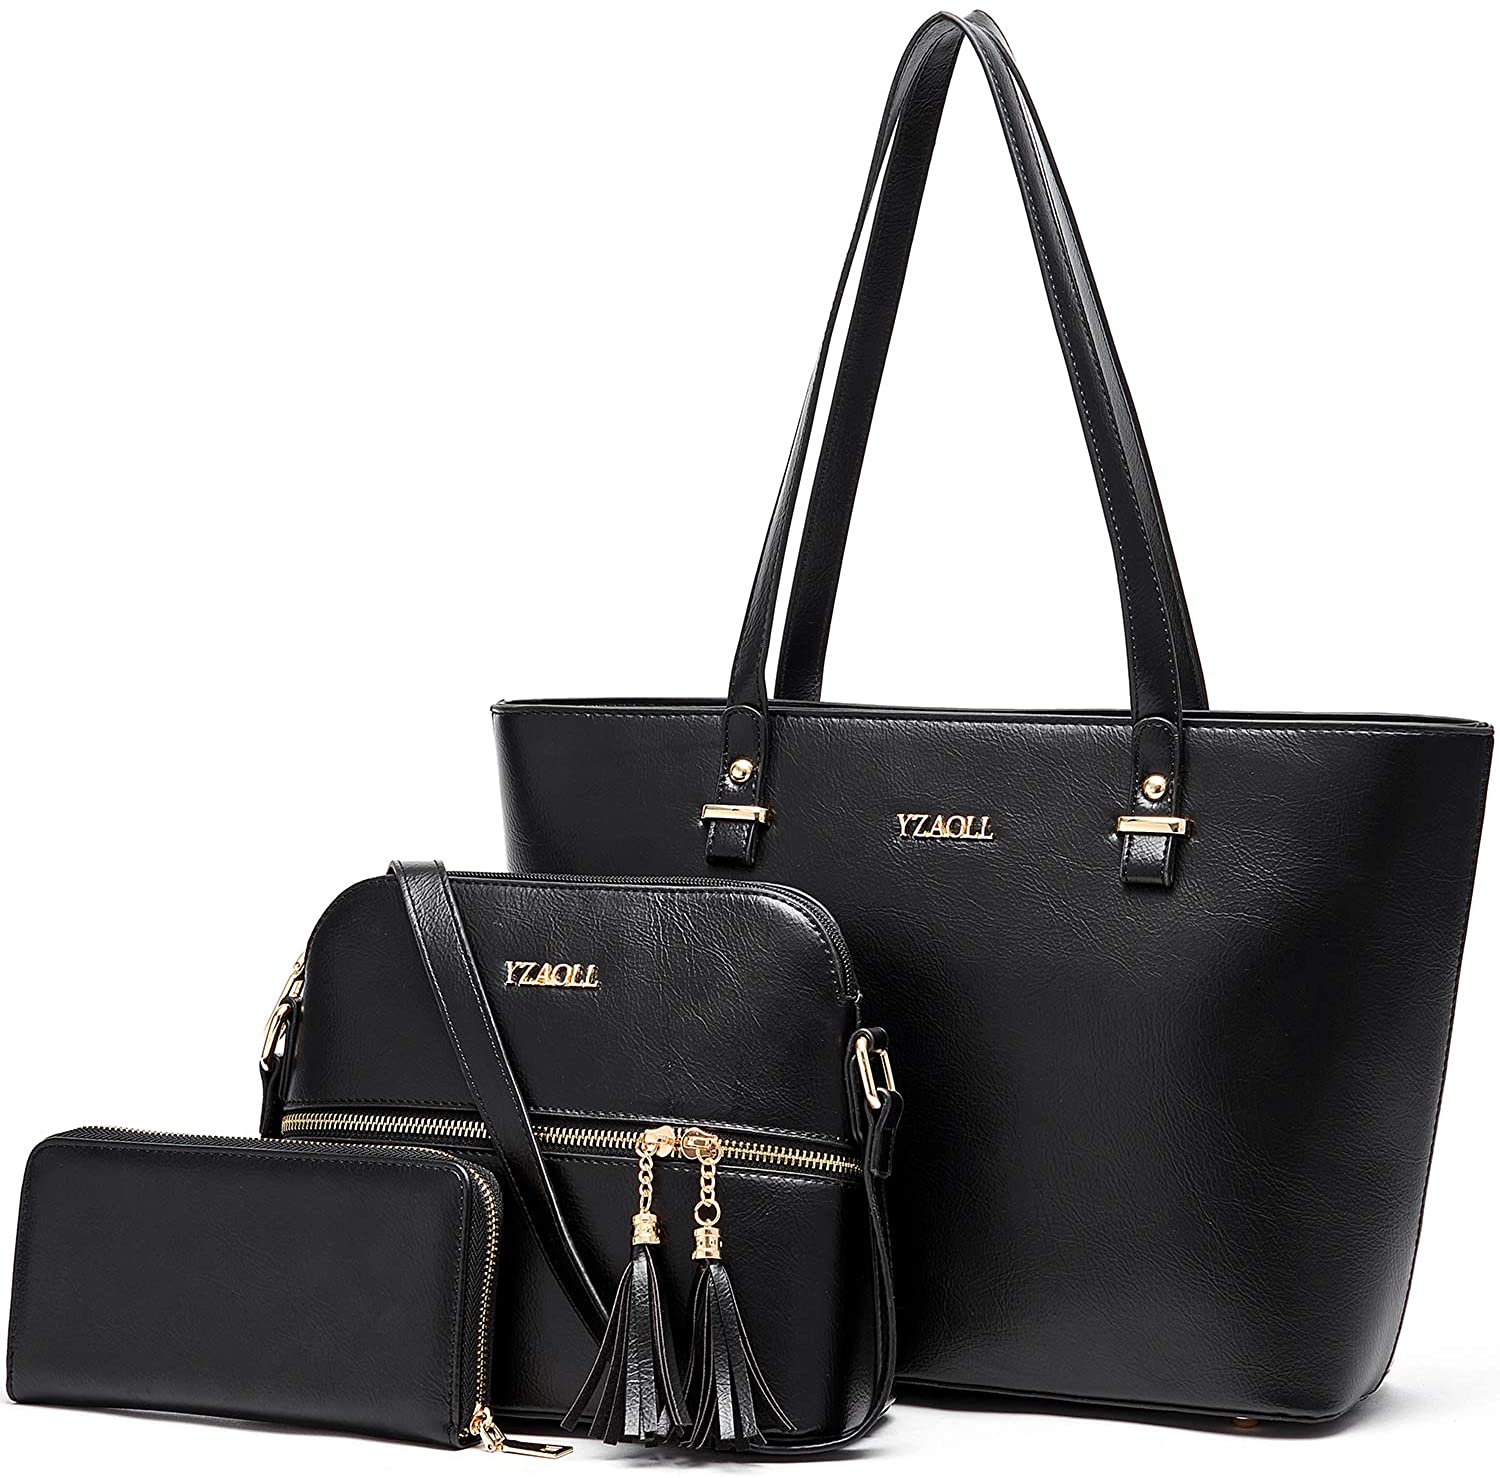 Price:$35.99    Satchel Purses and Handbags for Women Shoulder Tote Bags Wallets 3pcs Ladies Work Purses Set Black  Clothing